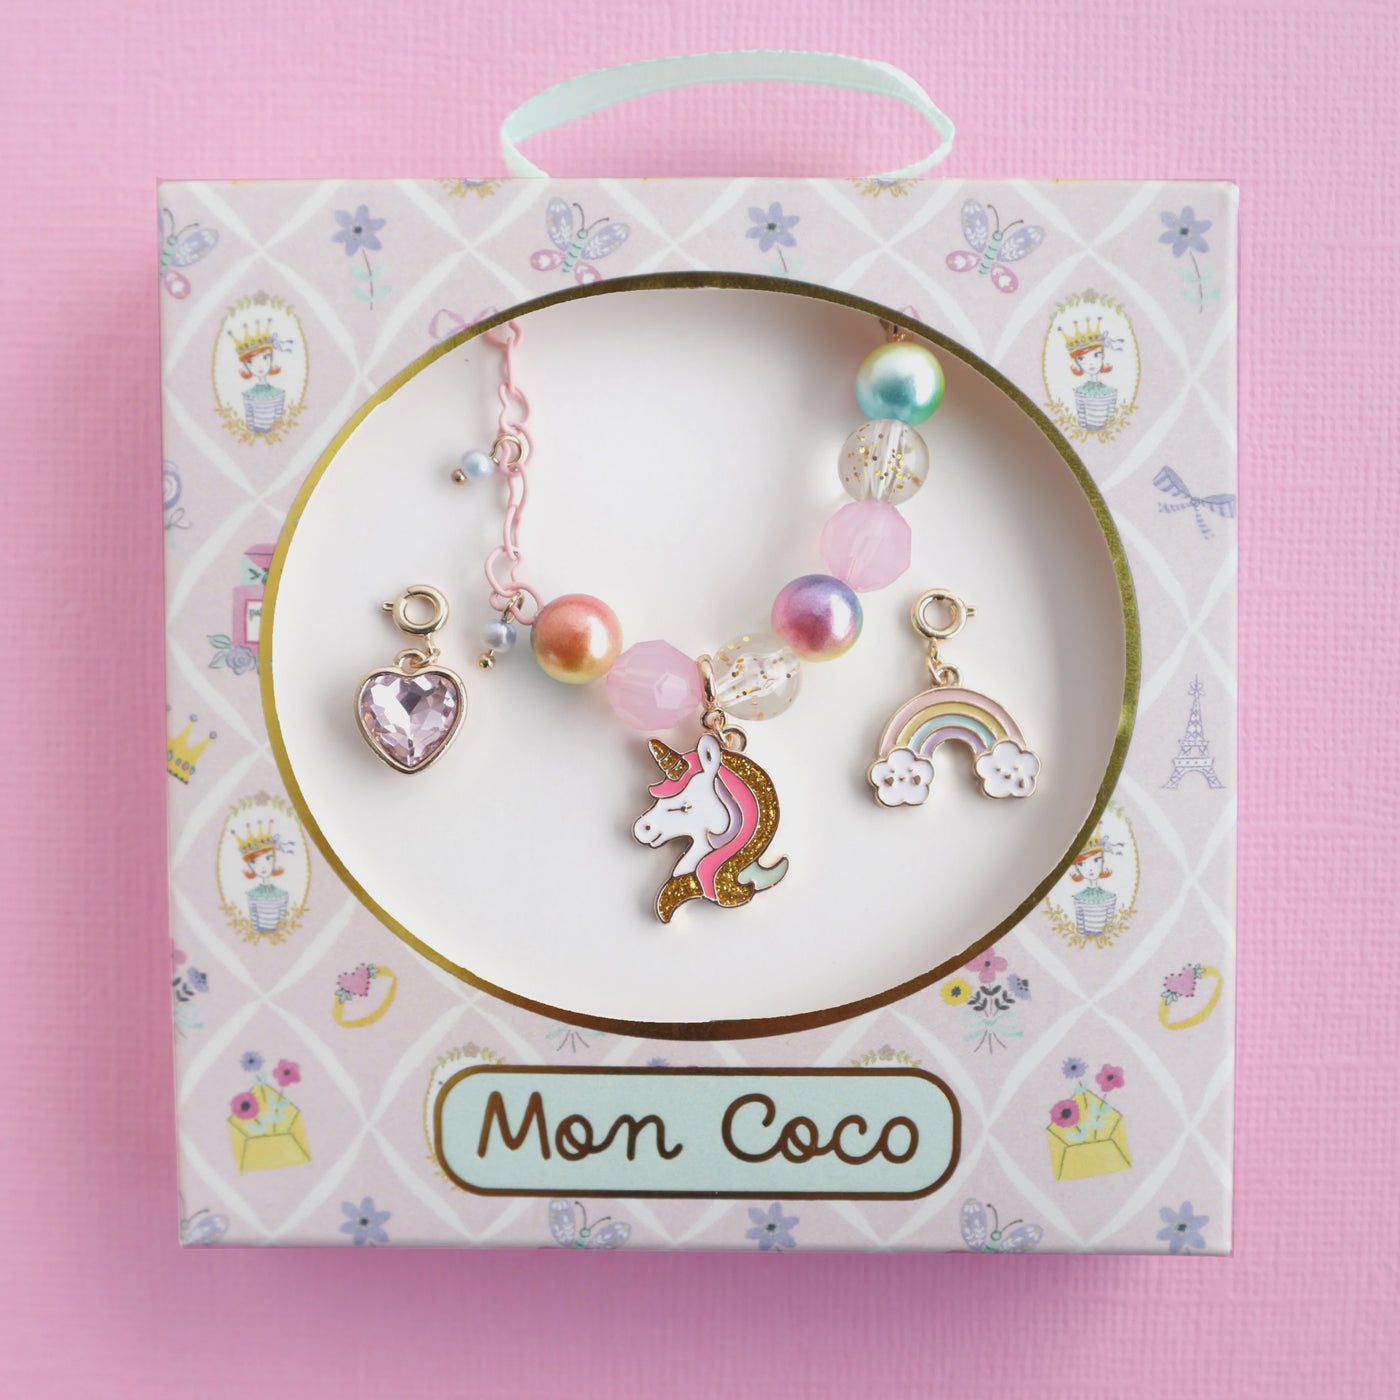 Mon Coco Unicorn dreams charm bracelet